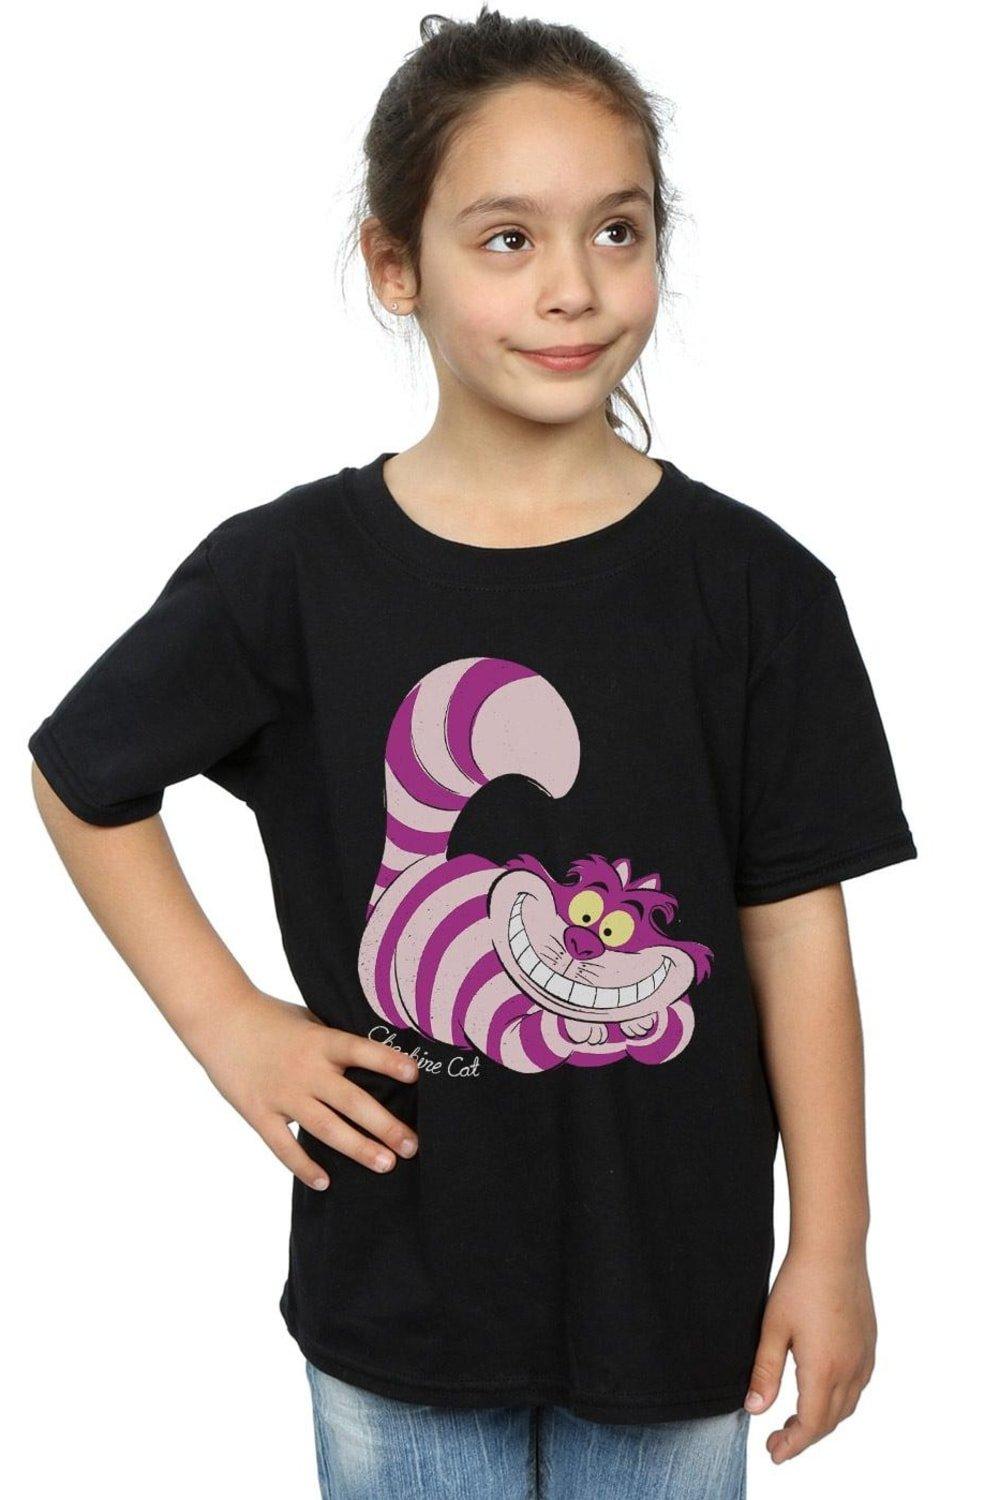 Alice In Wonderland Cheshire Cat Cotton T-Shirt